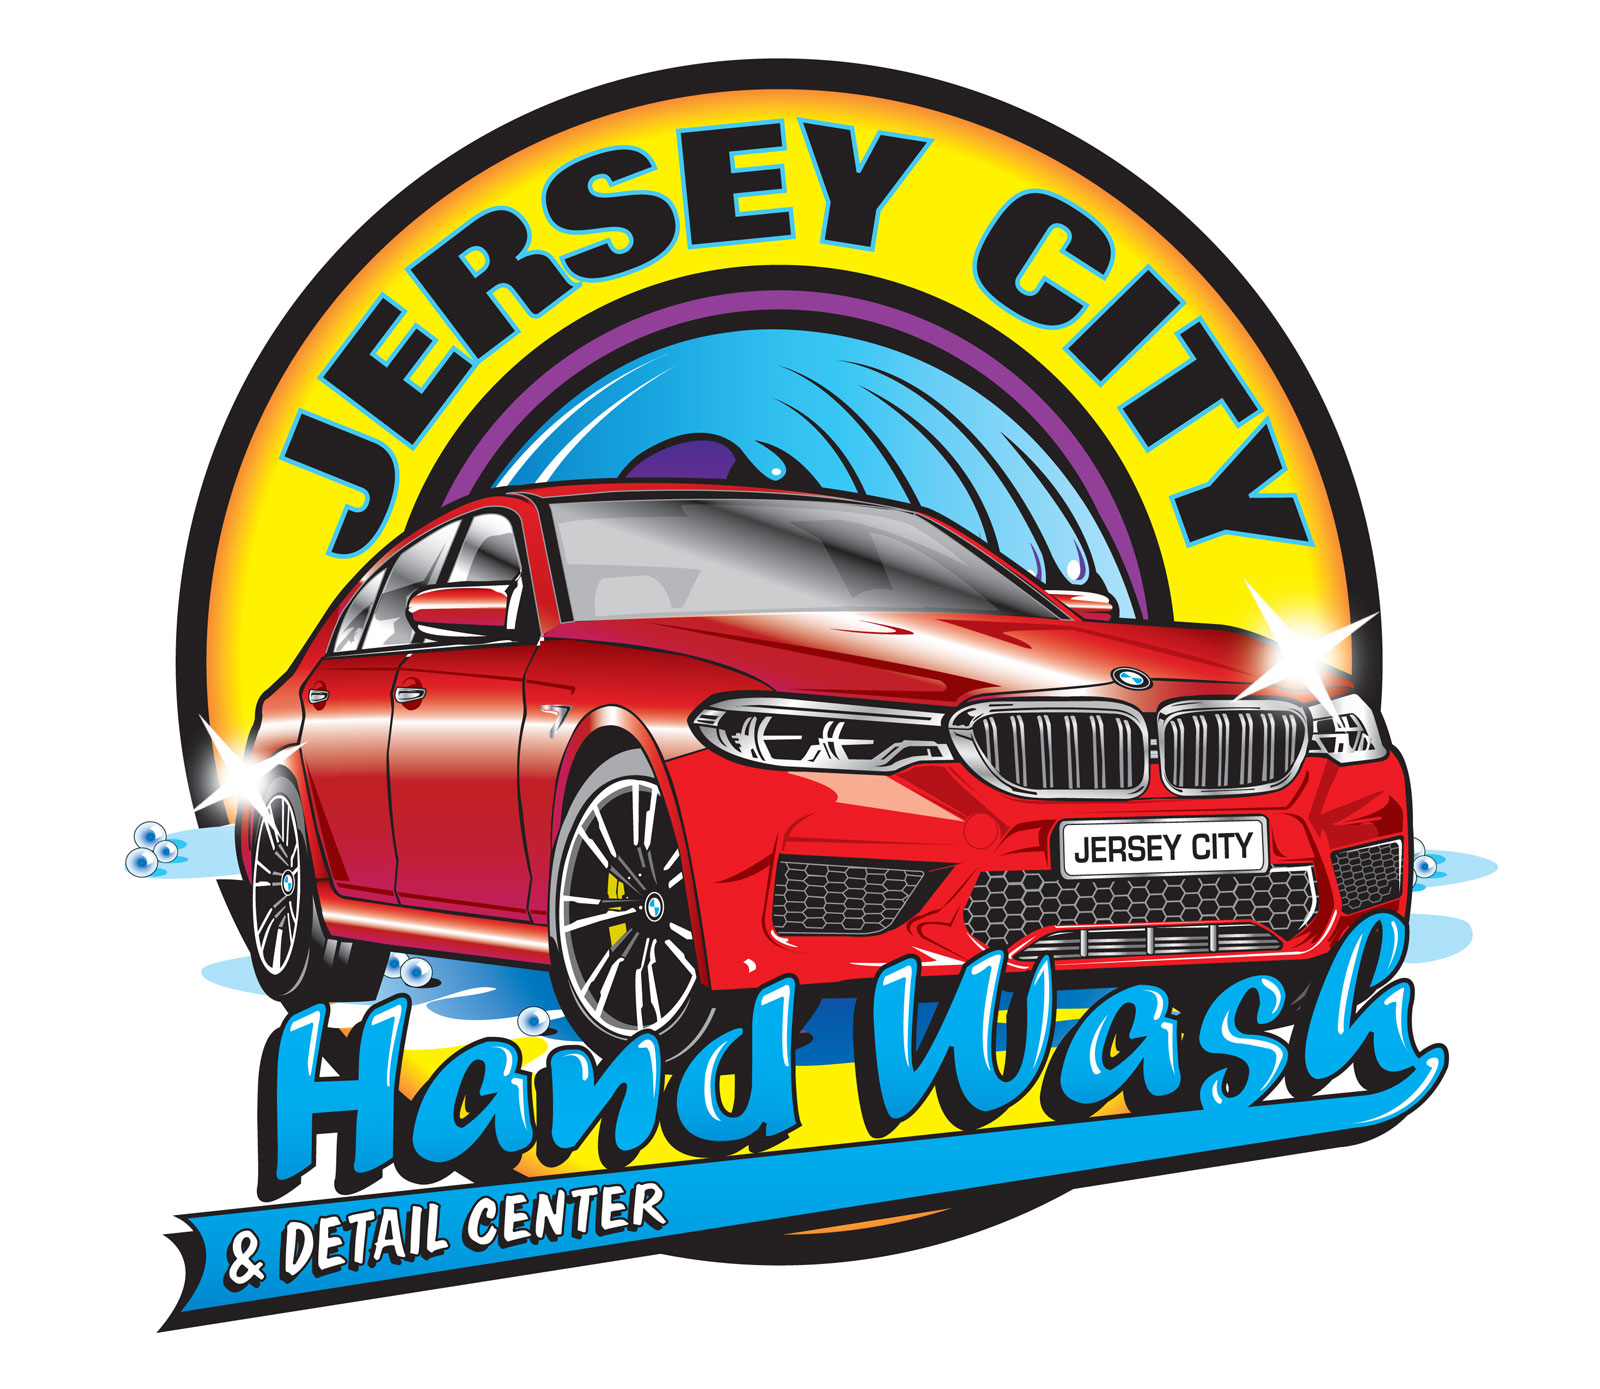 Jersey City Hand Wash & Detail Center